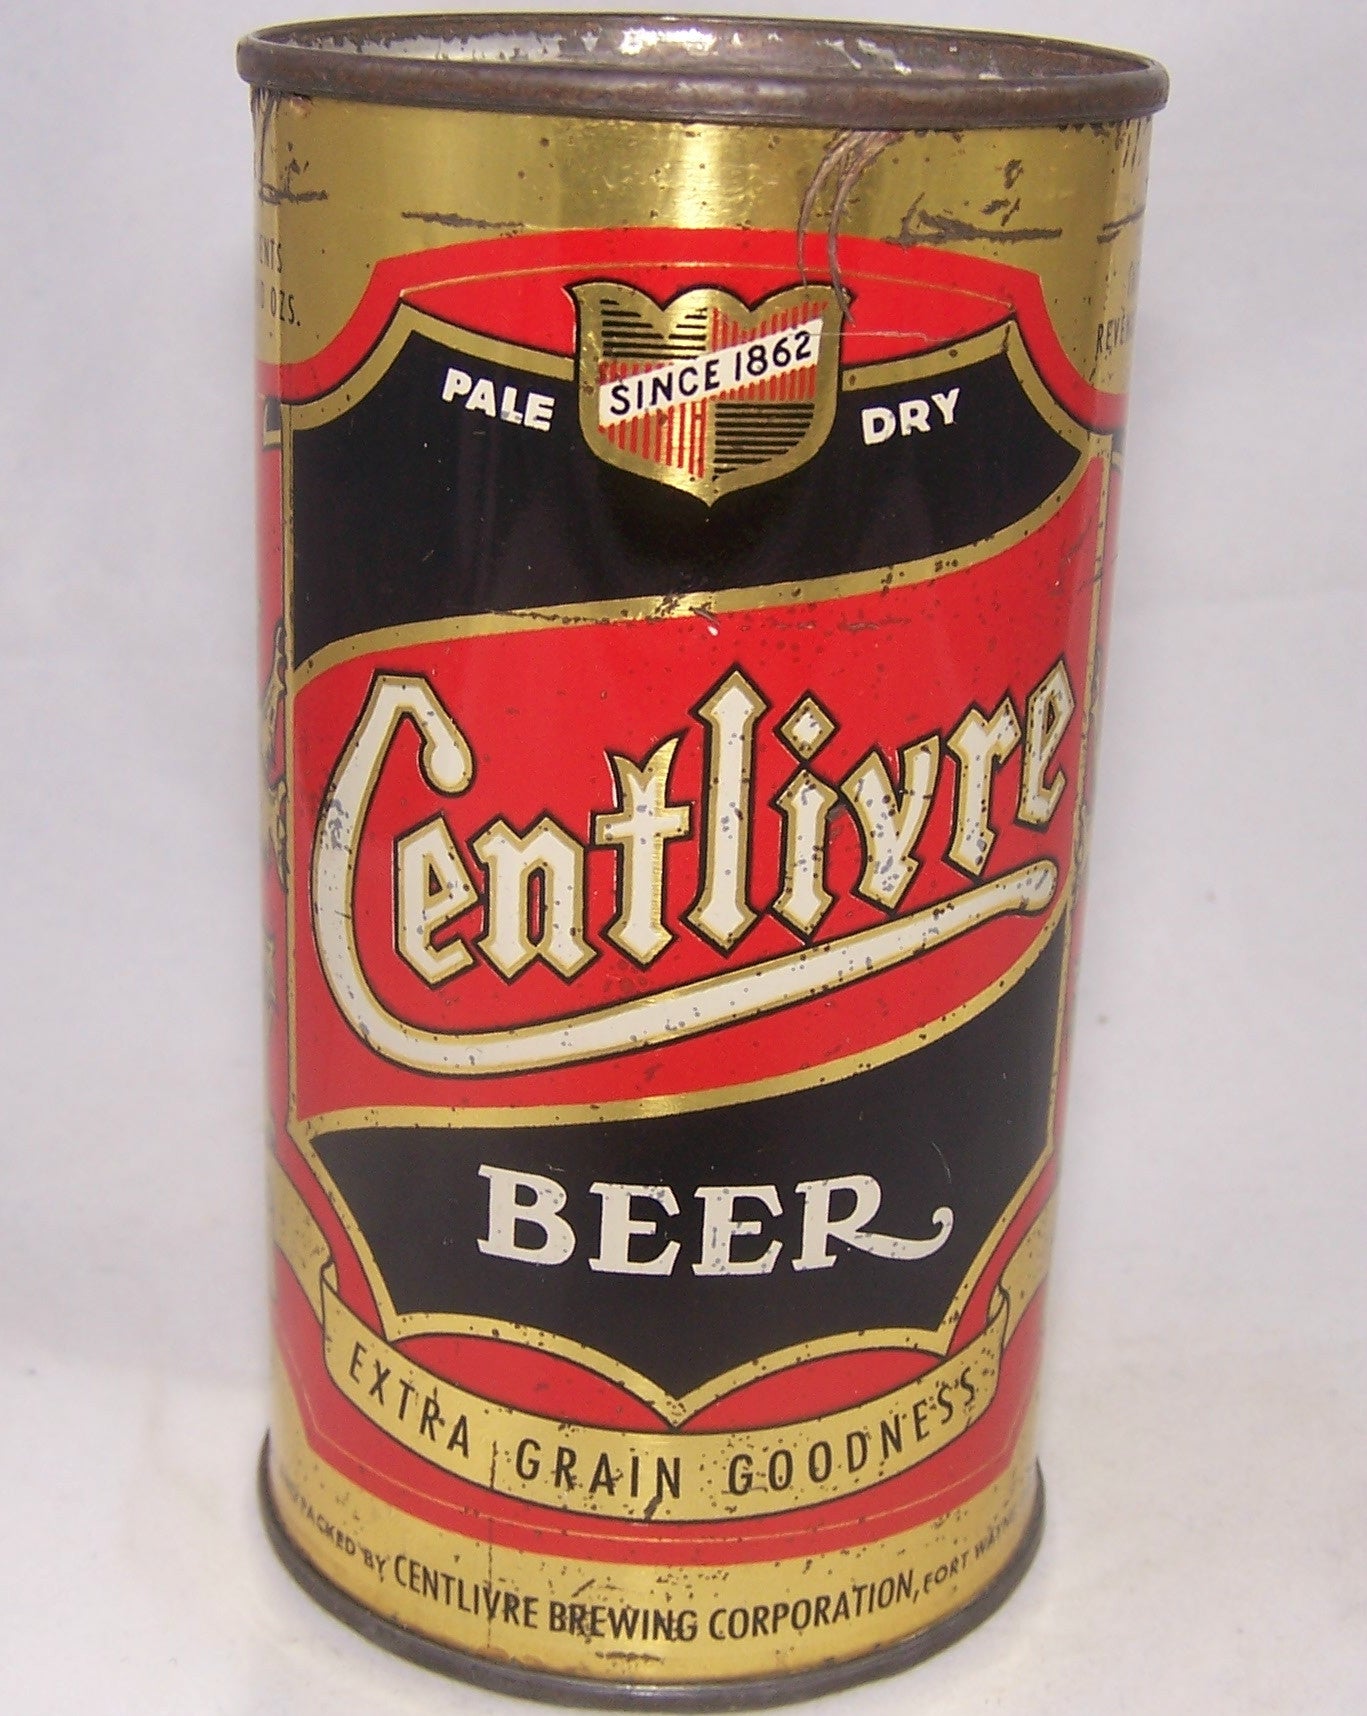 Centlivre Beer, Lilek #182, Grade 1- Sold on 01/18/17